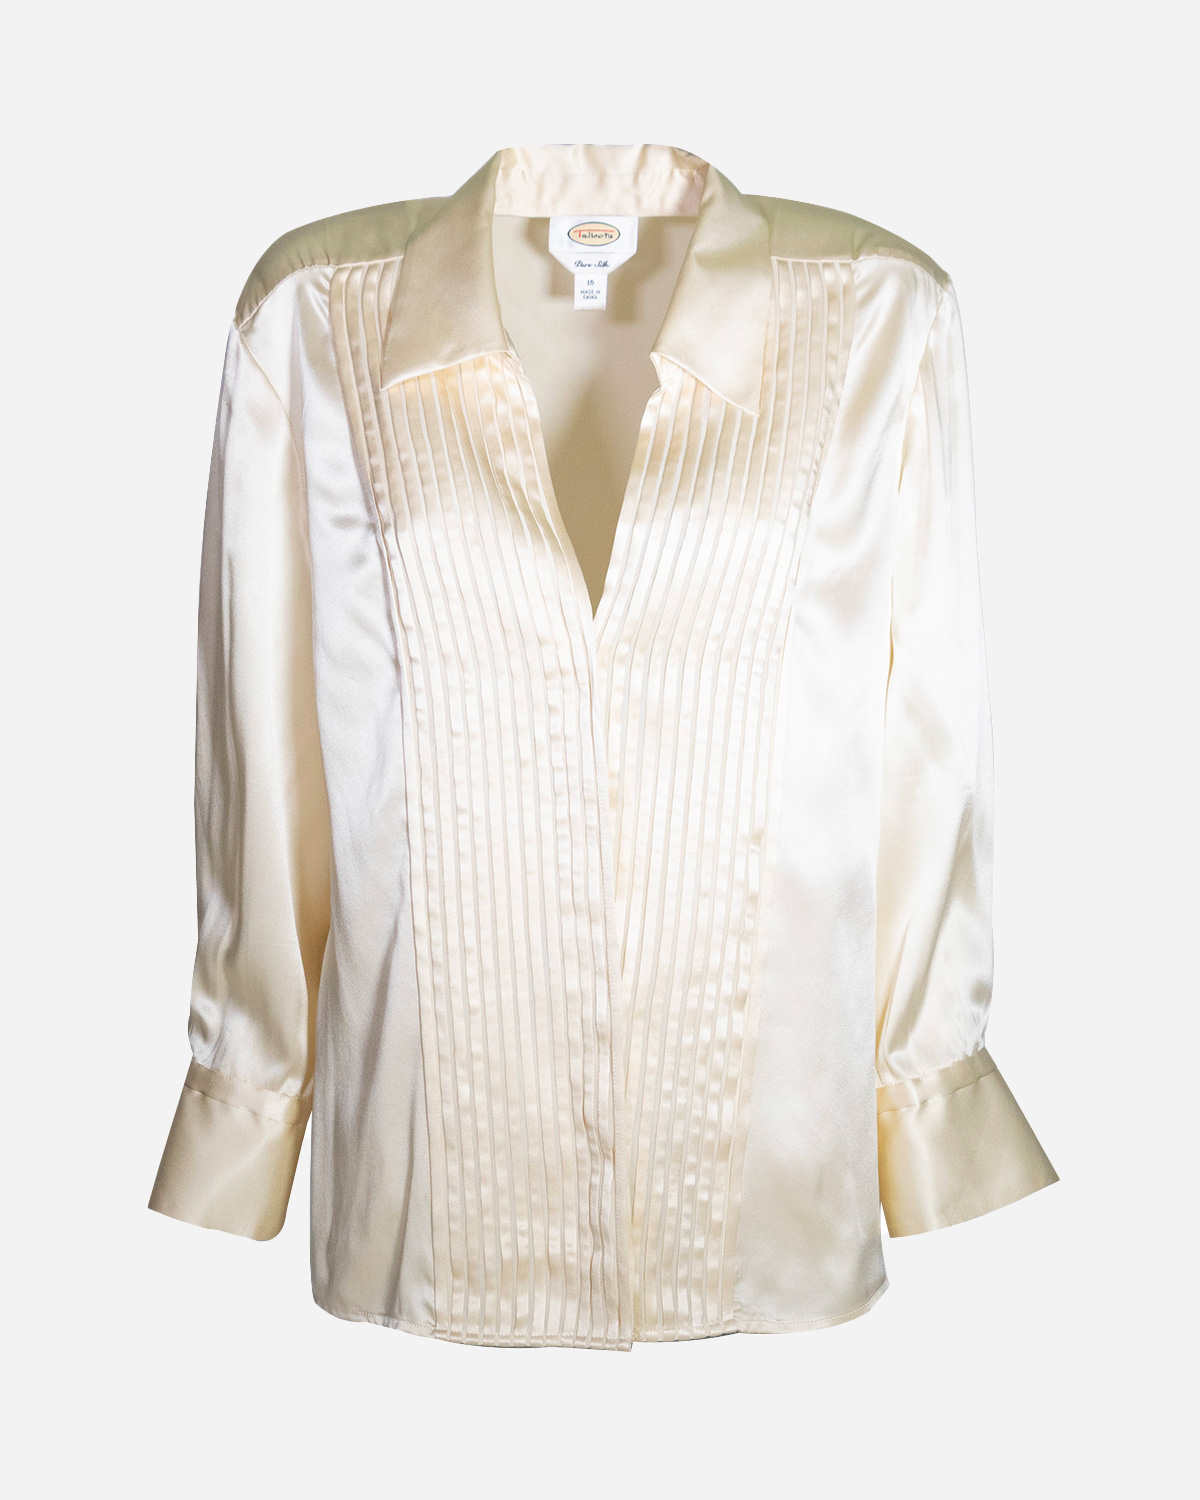 Women’s silk vintage shirts: 4 pieces